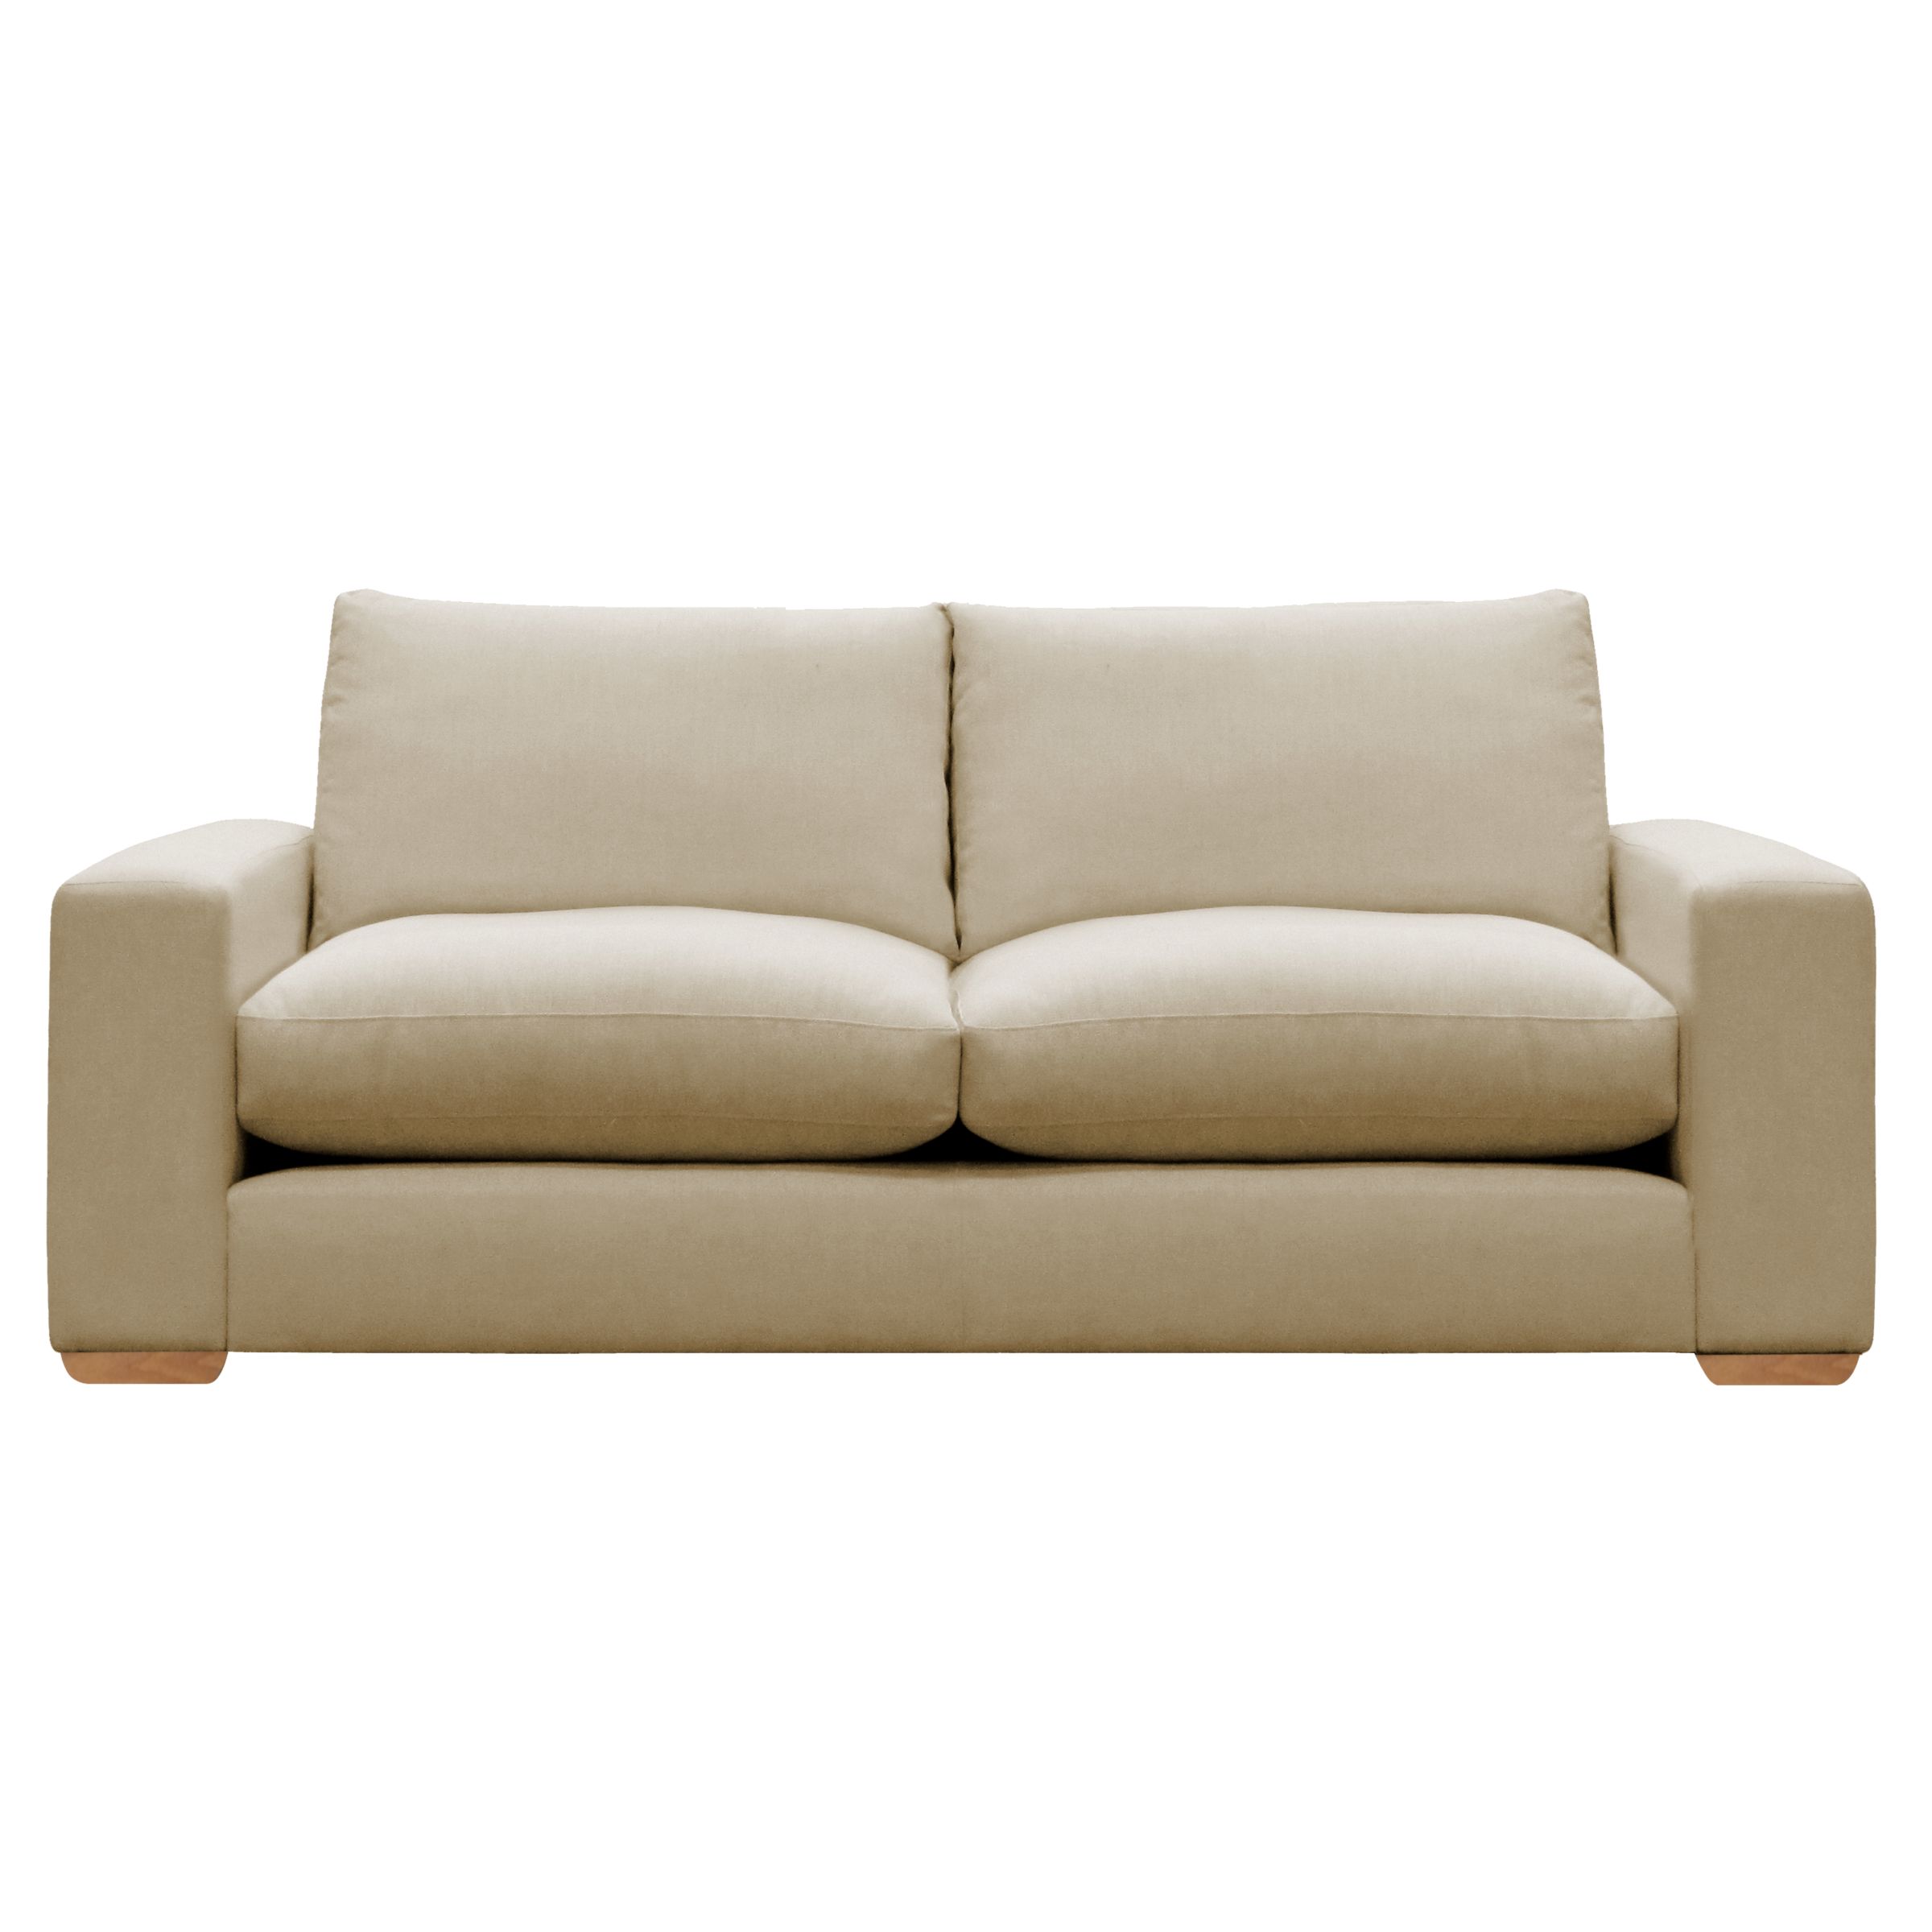 John Lewis Options Wide Arm Large Sofa, Eaton Mocha, width 200cm